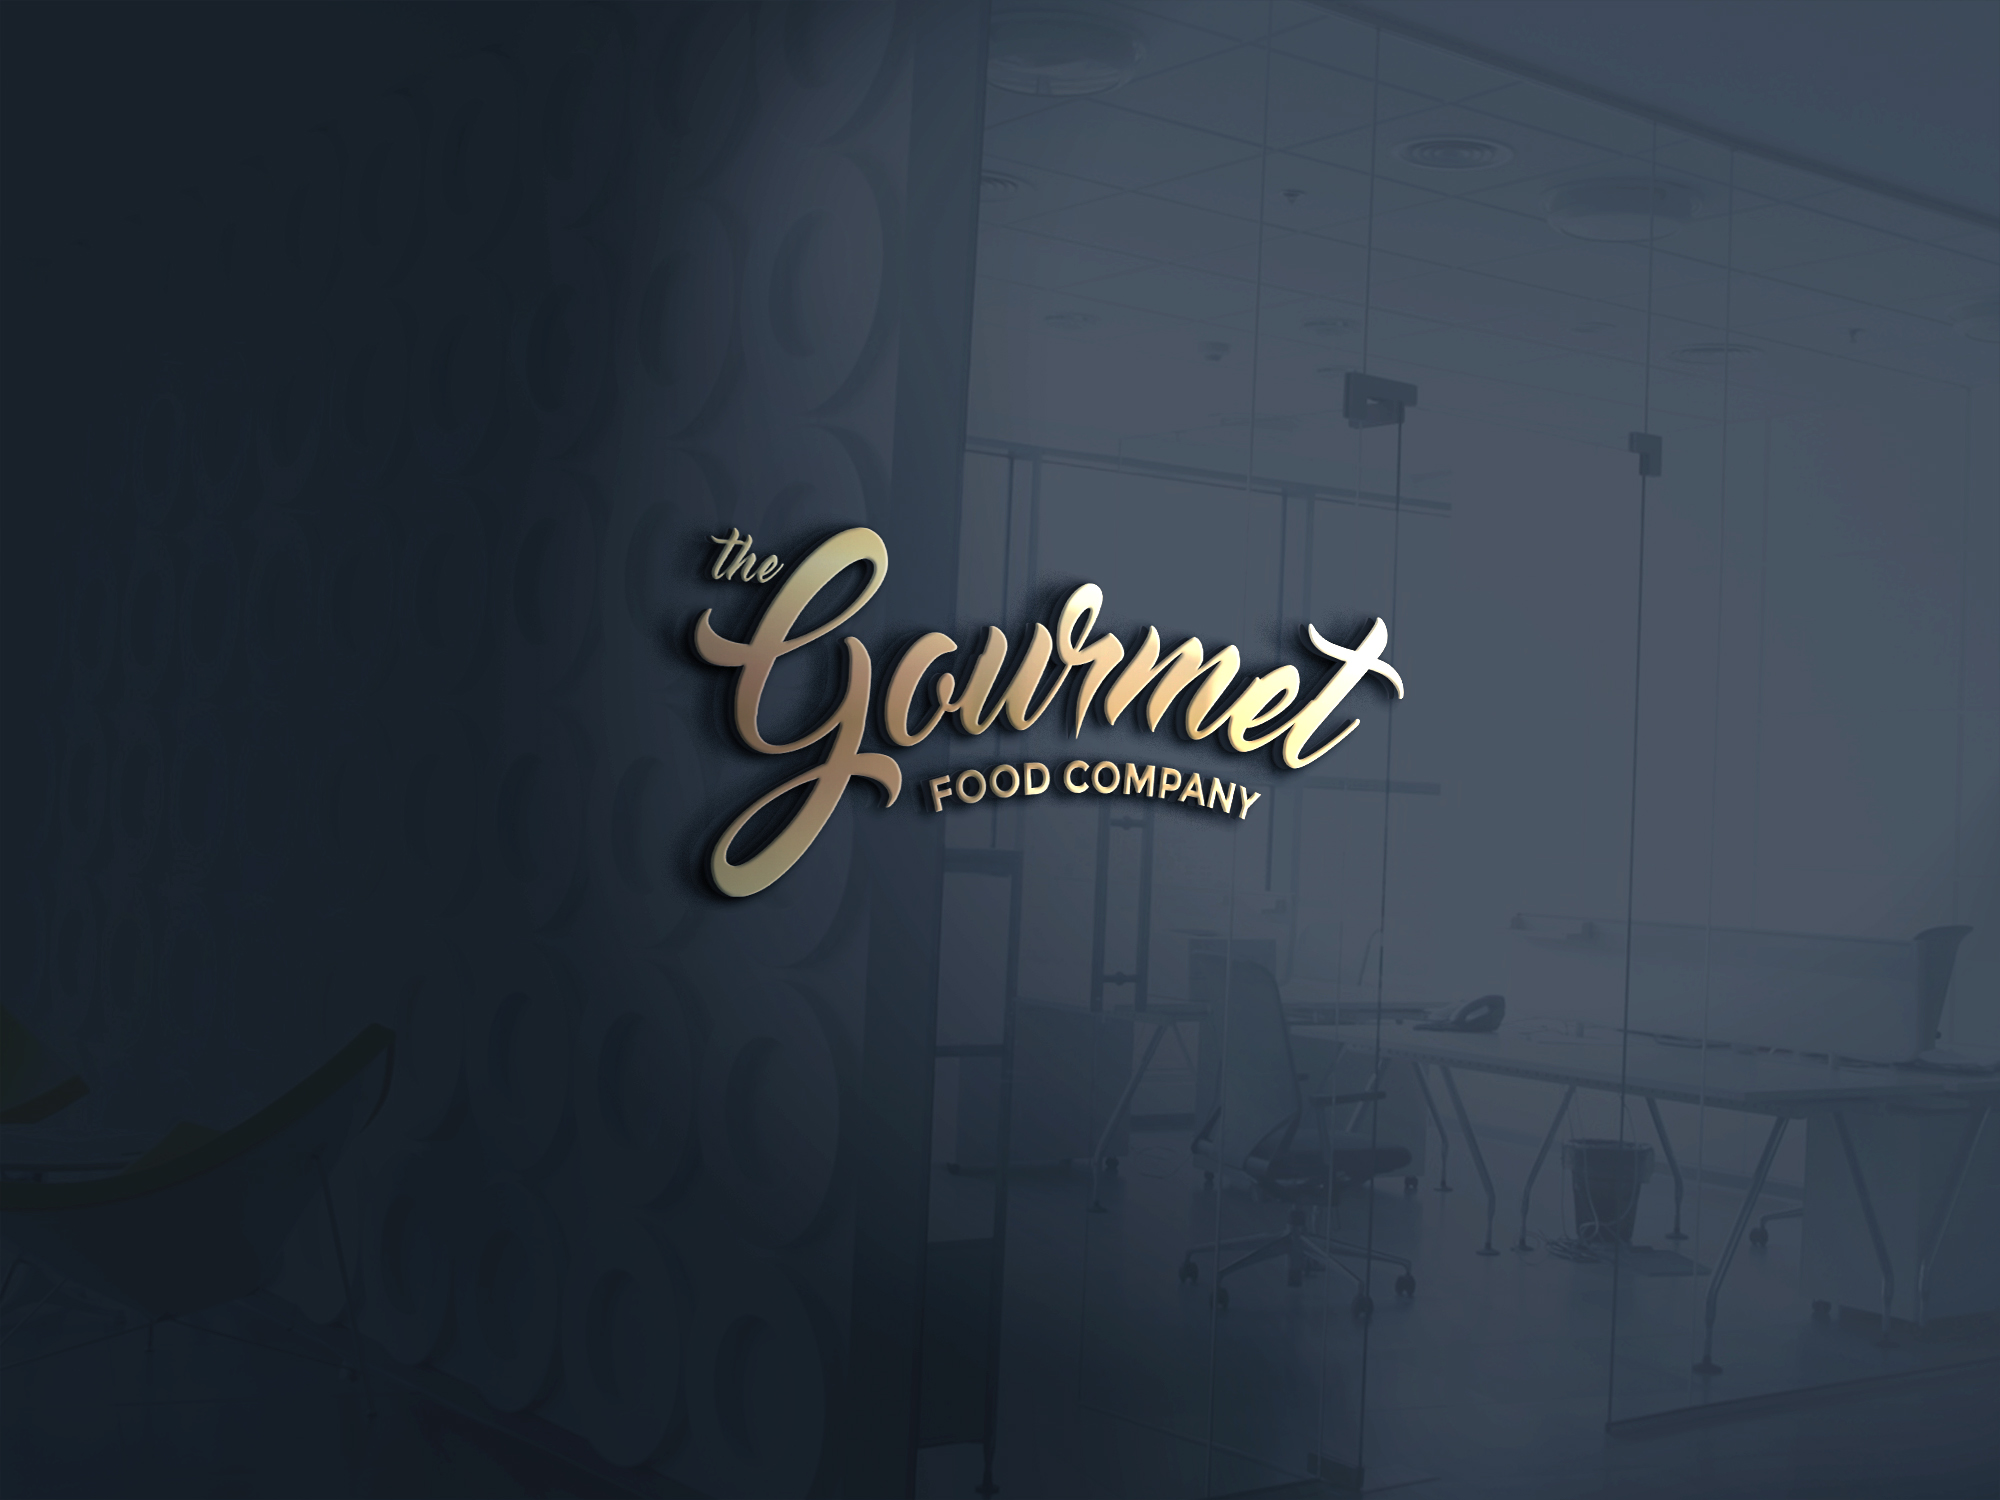 Logo Design The Gourmet Food Company Design Project Designcontest